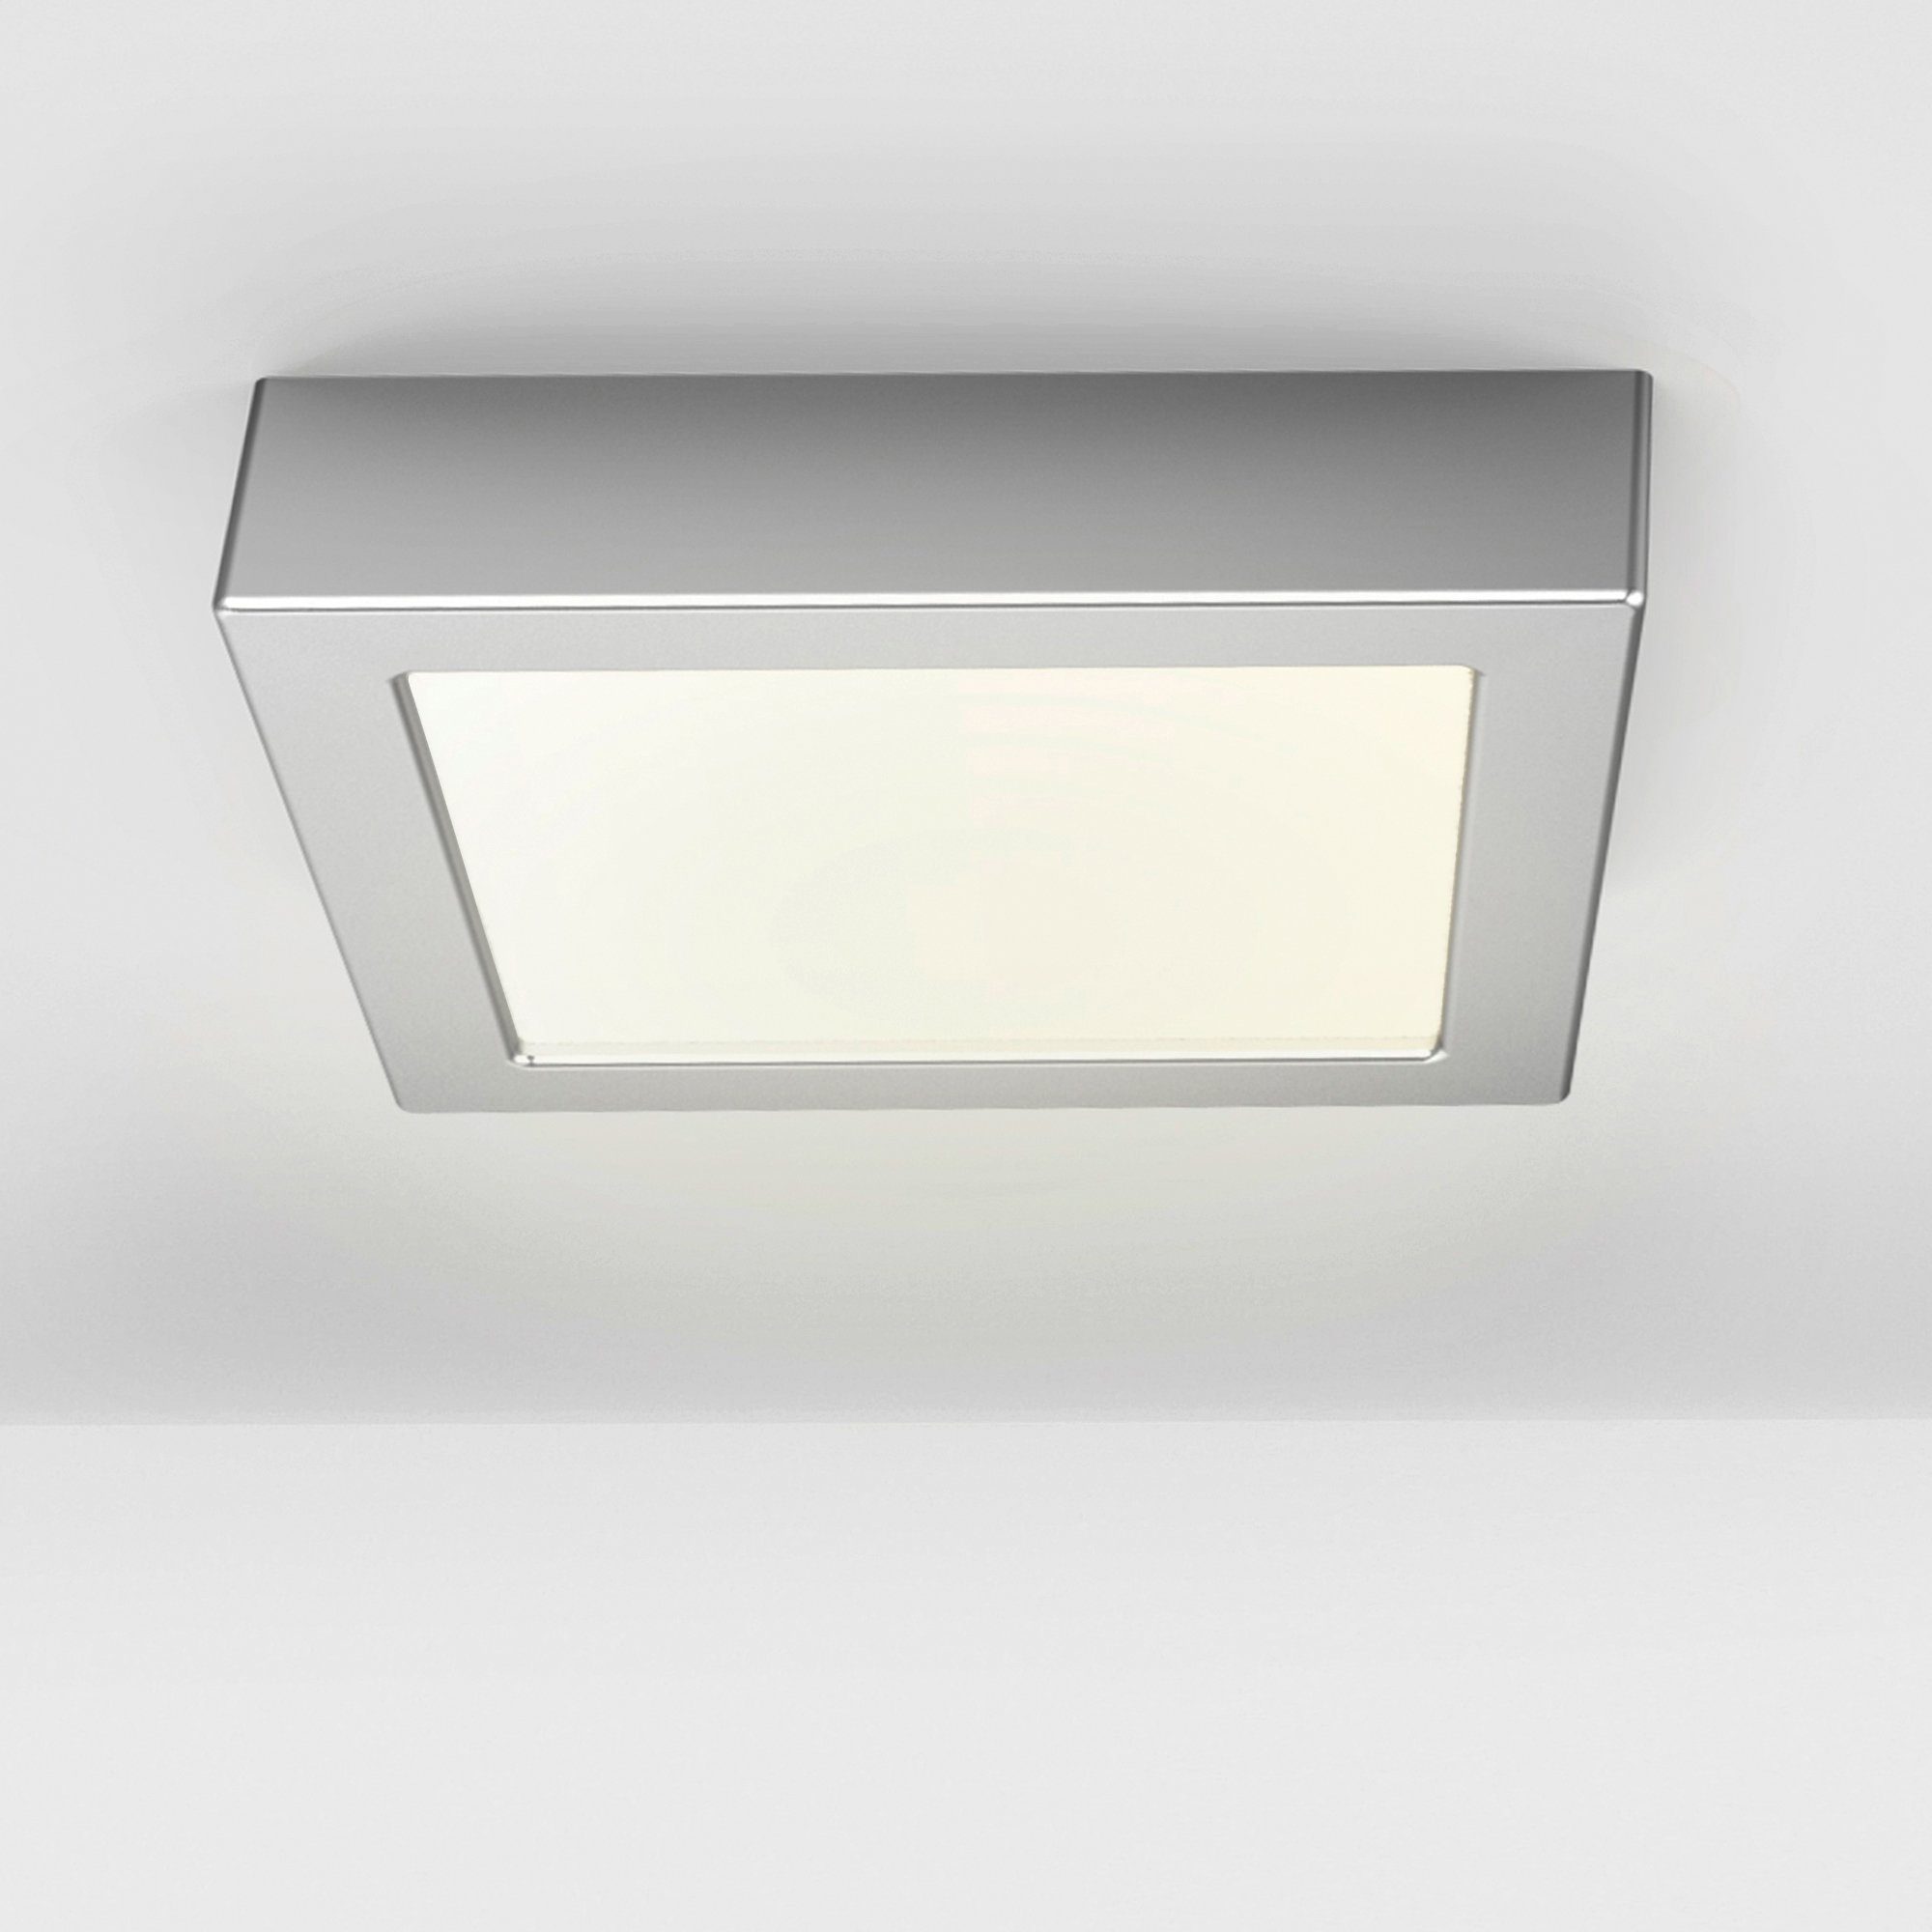 B.K.Licht LED Aufbaustrahler Garnet, LED fest integriert, Warmweiß, LED Unterbauleuchte Panel 12W Aufbauleuchte Lampe Aufputzspot | Aufbaustrahler